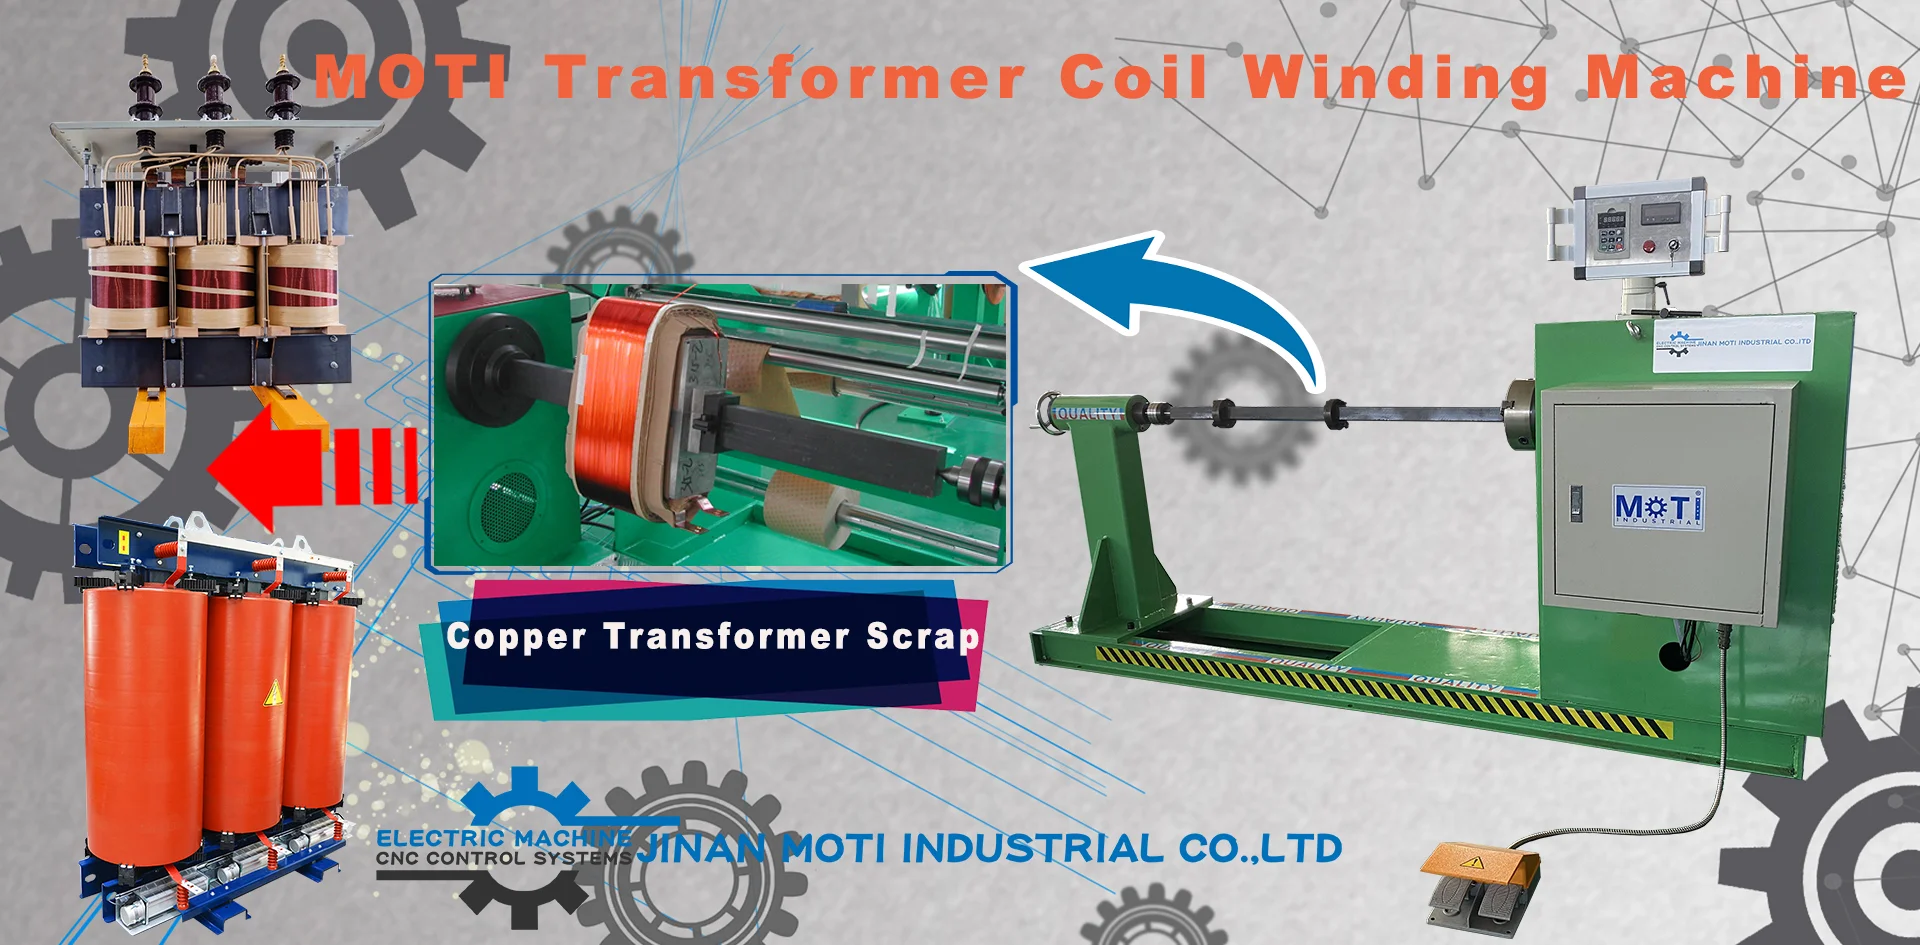 mstransformer coil winding machine-20210713